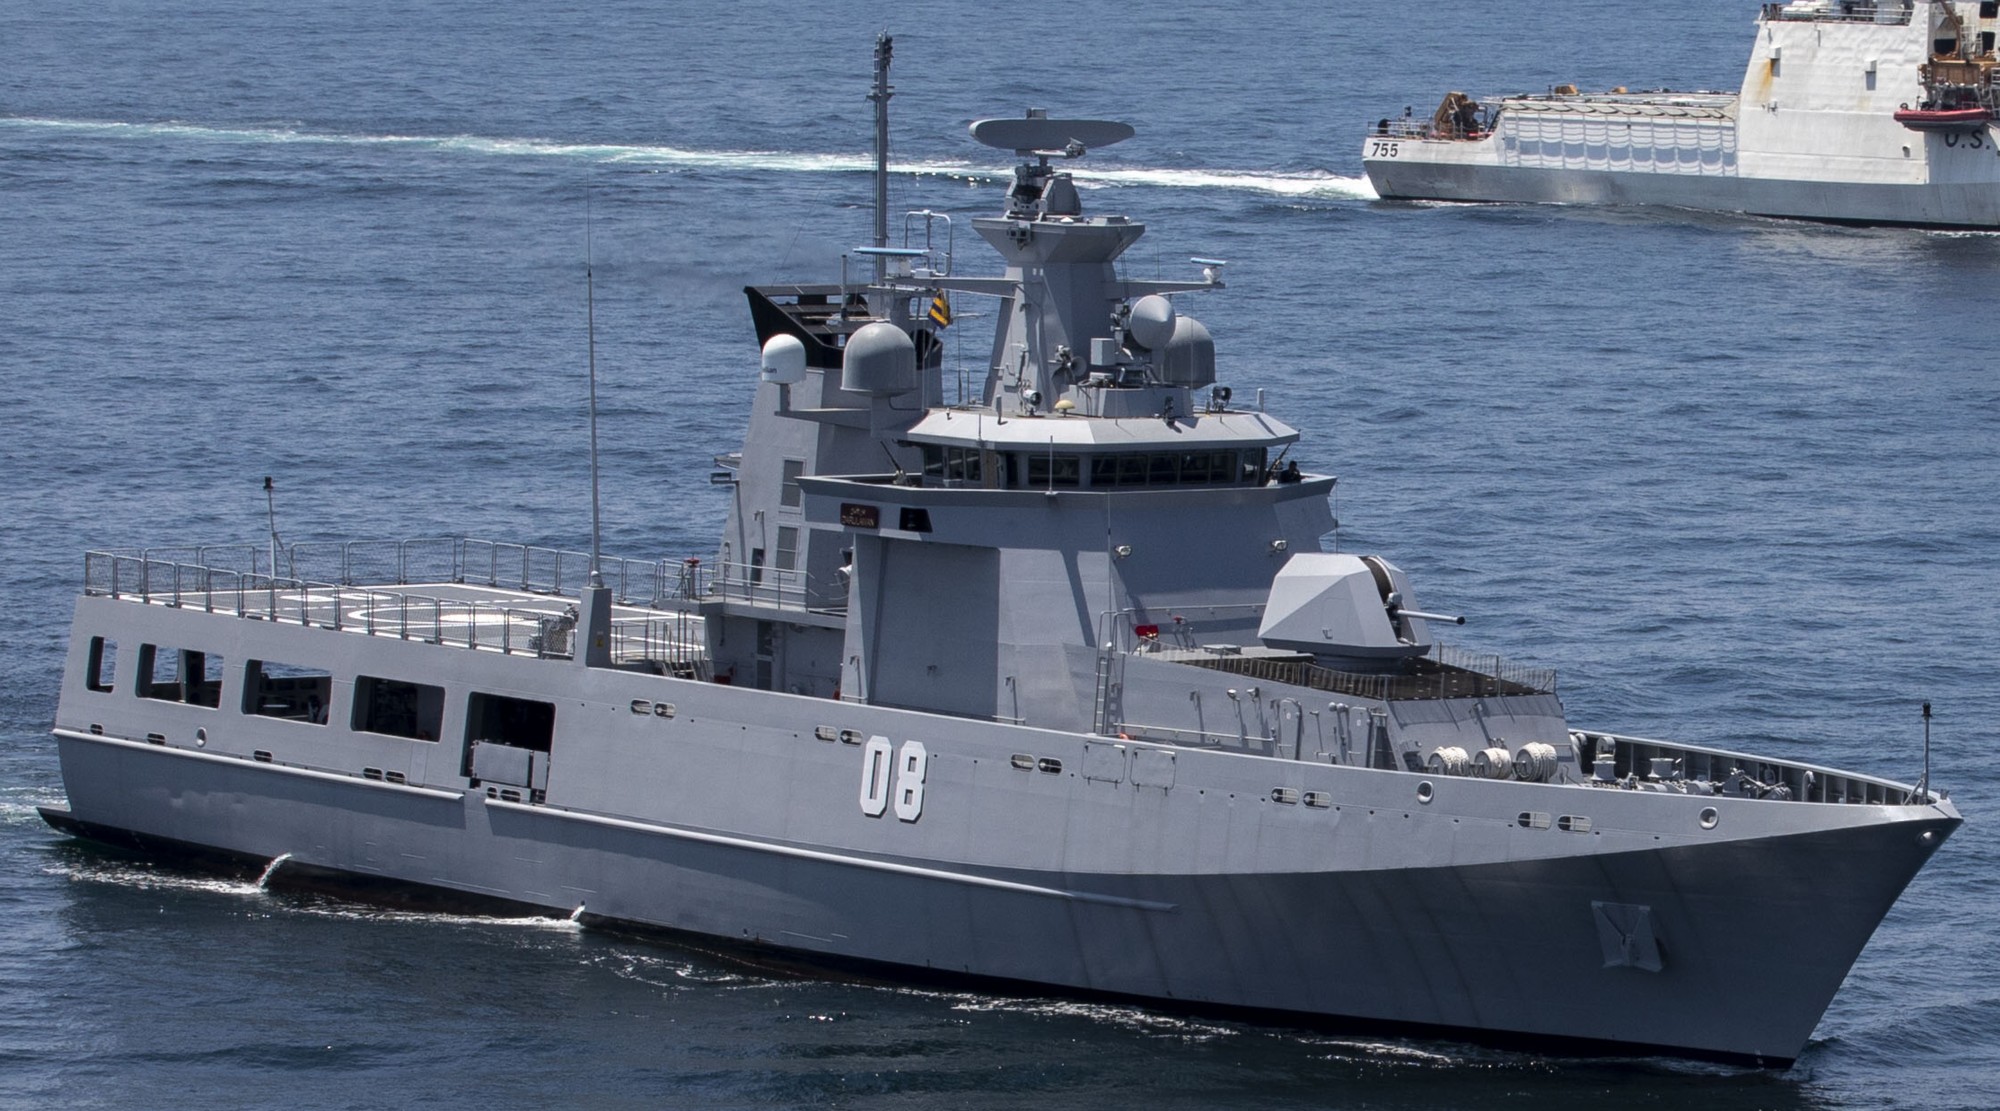 opv 08 kdb darulaman offshore patrol vessel darussalem class royal brunei navy 10